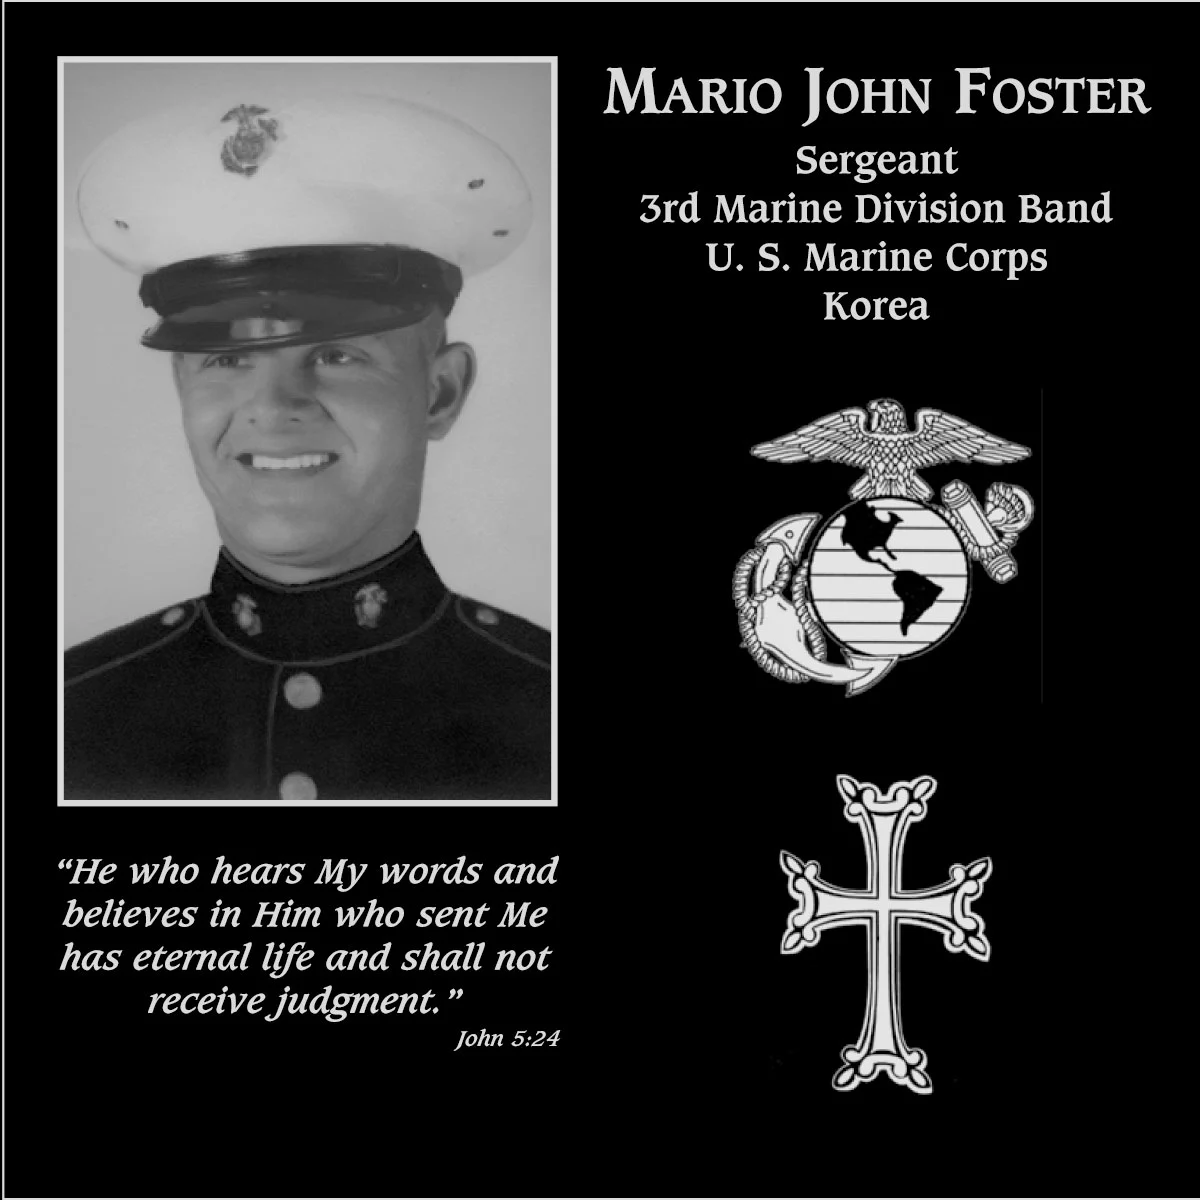 Mario John Foster